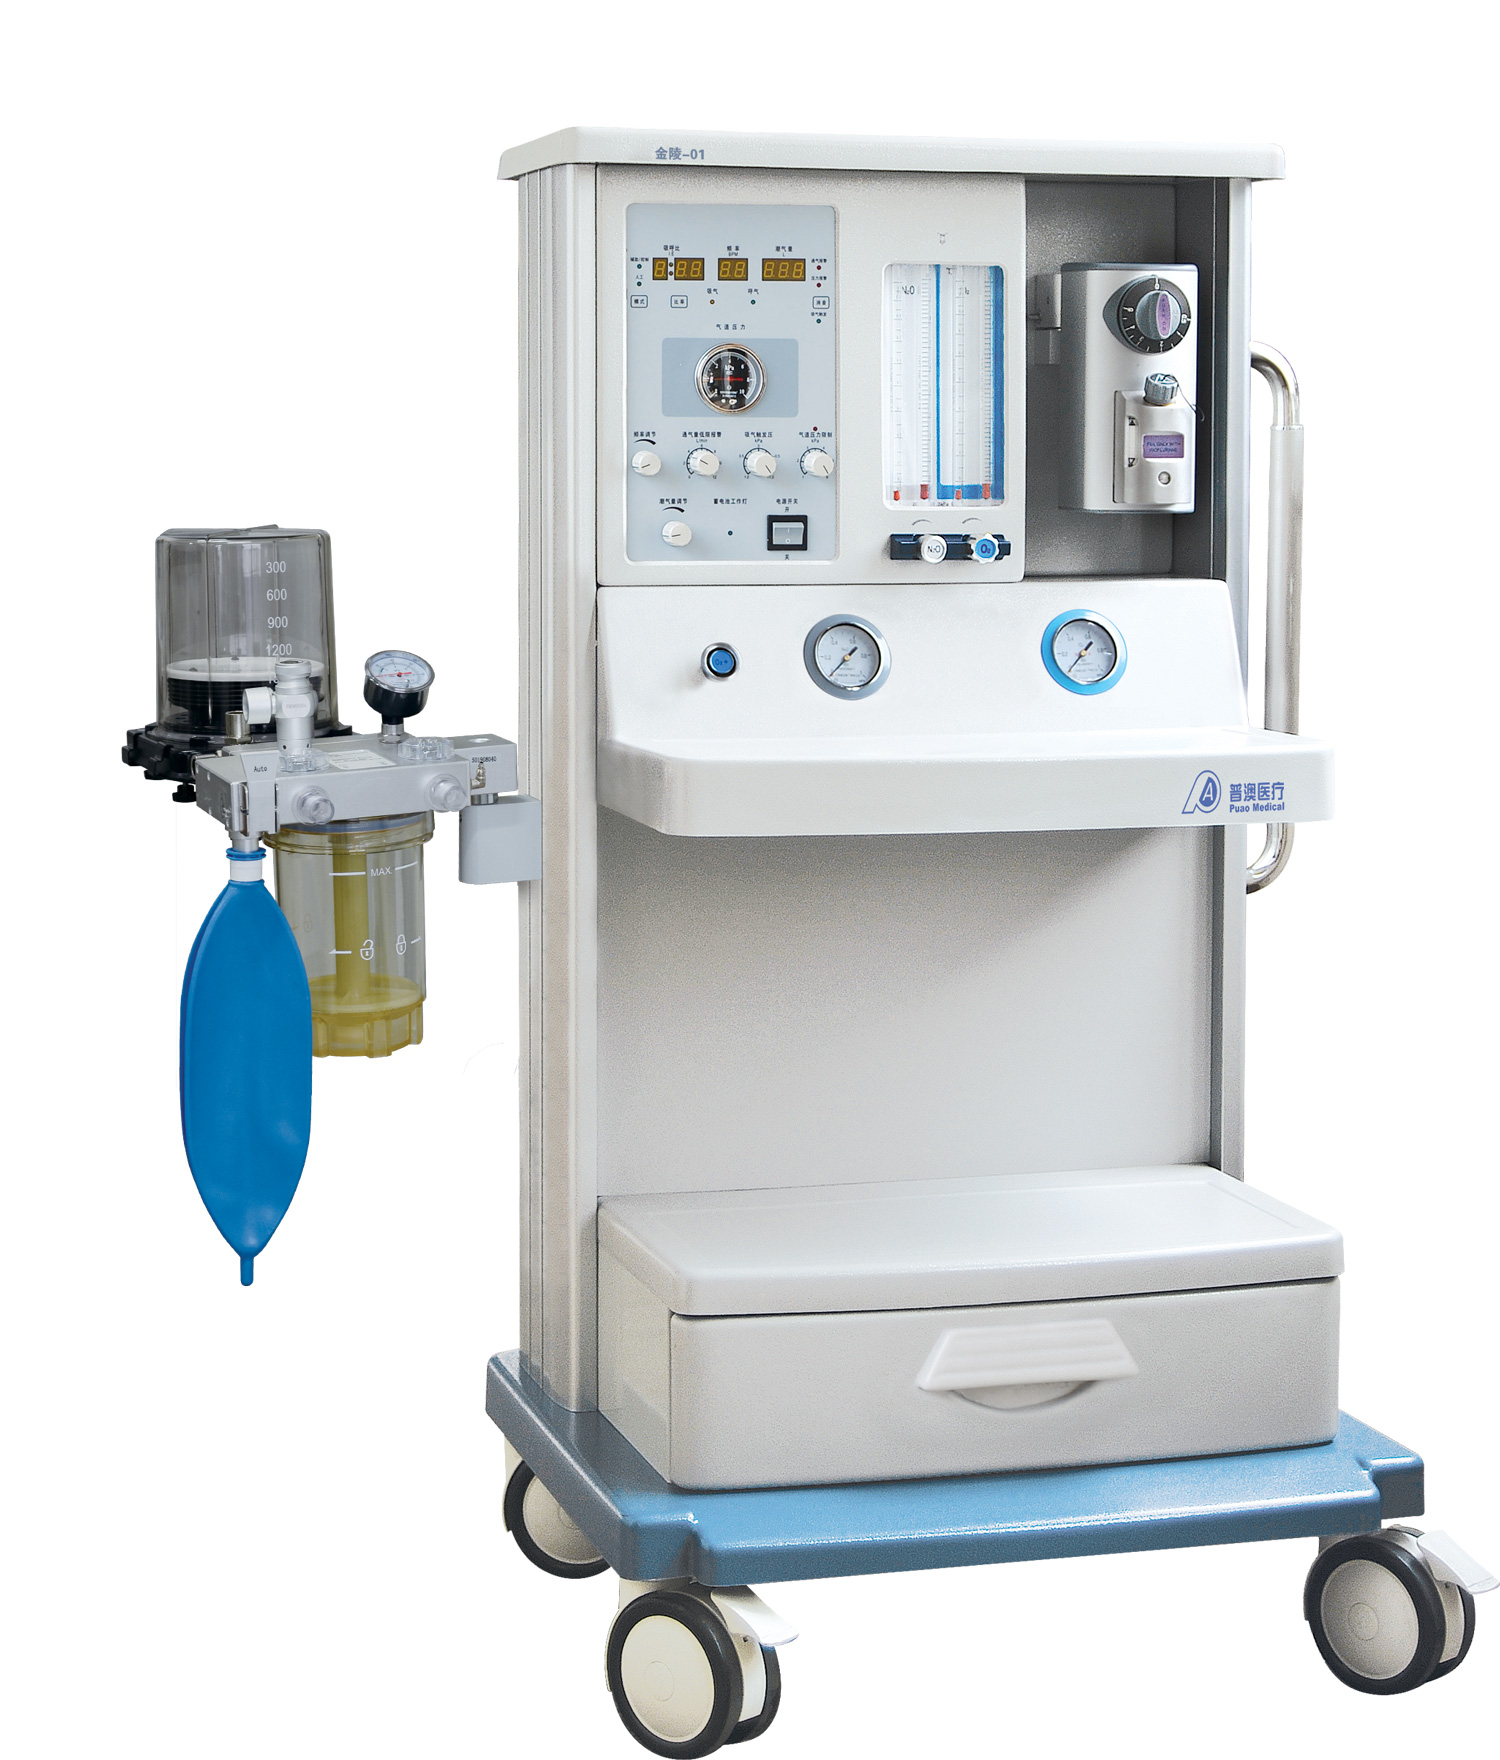 Anesthesia Machine JINLING-01